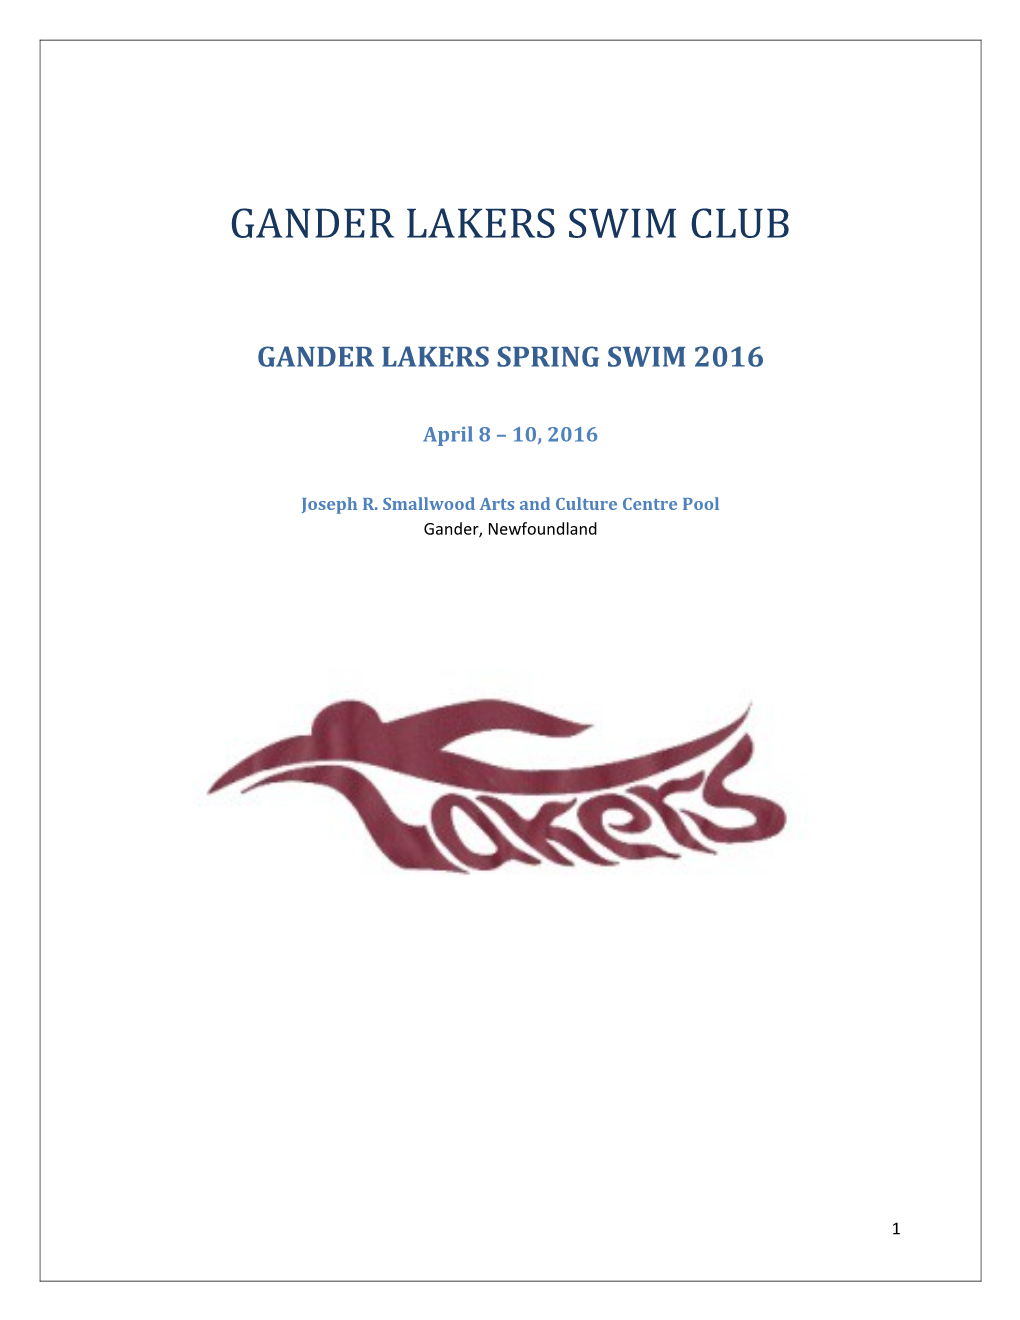 Gander Lakers Swim Club